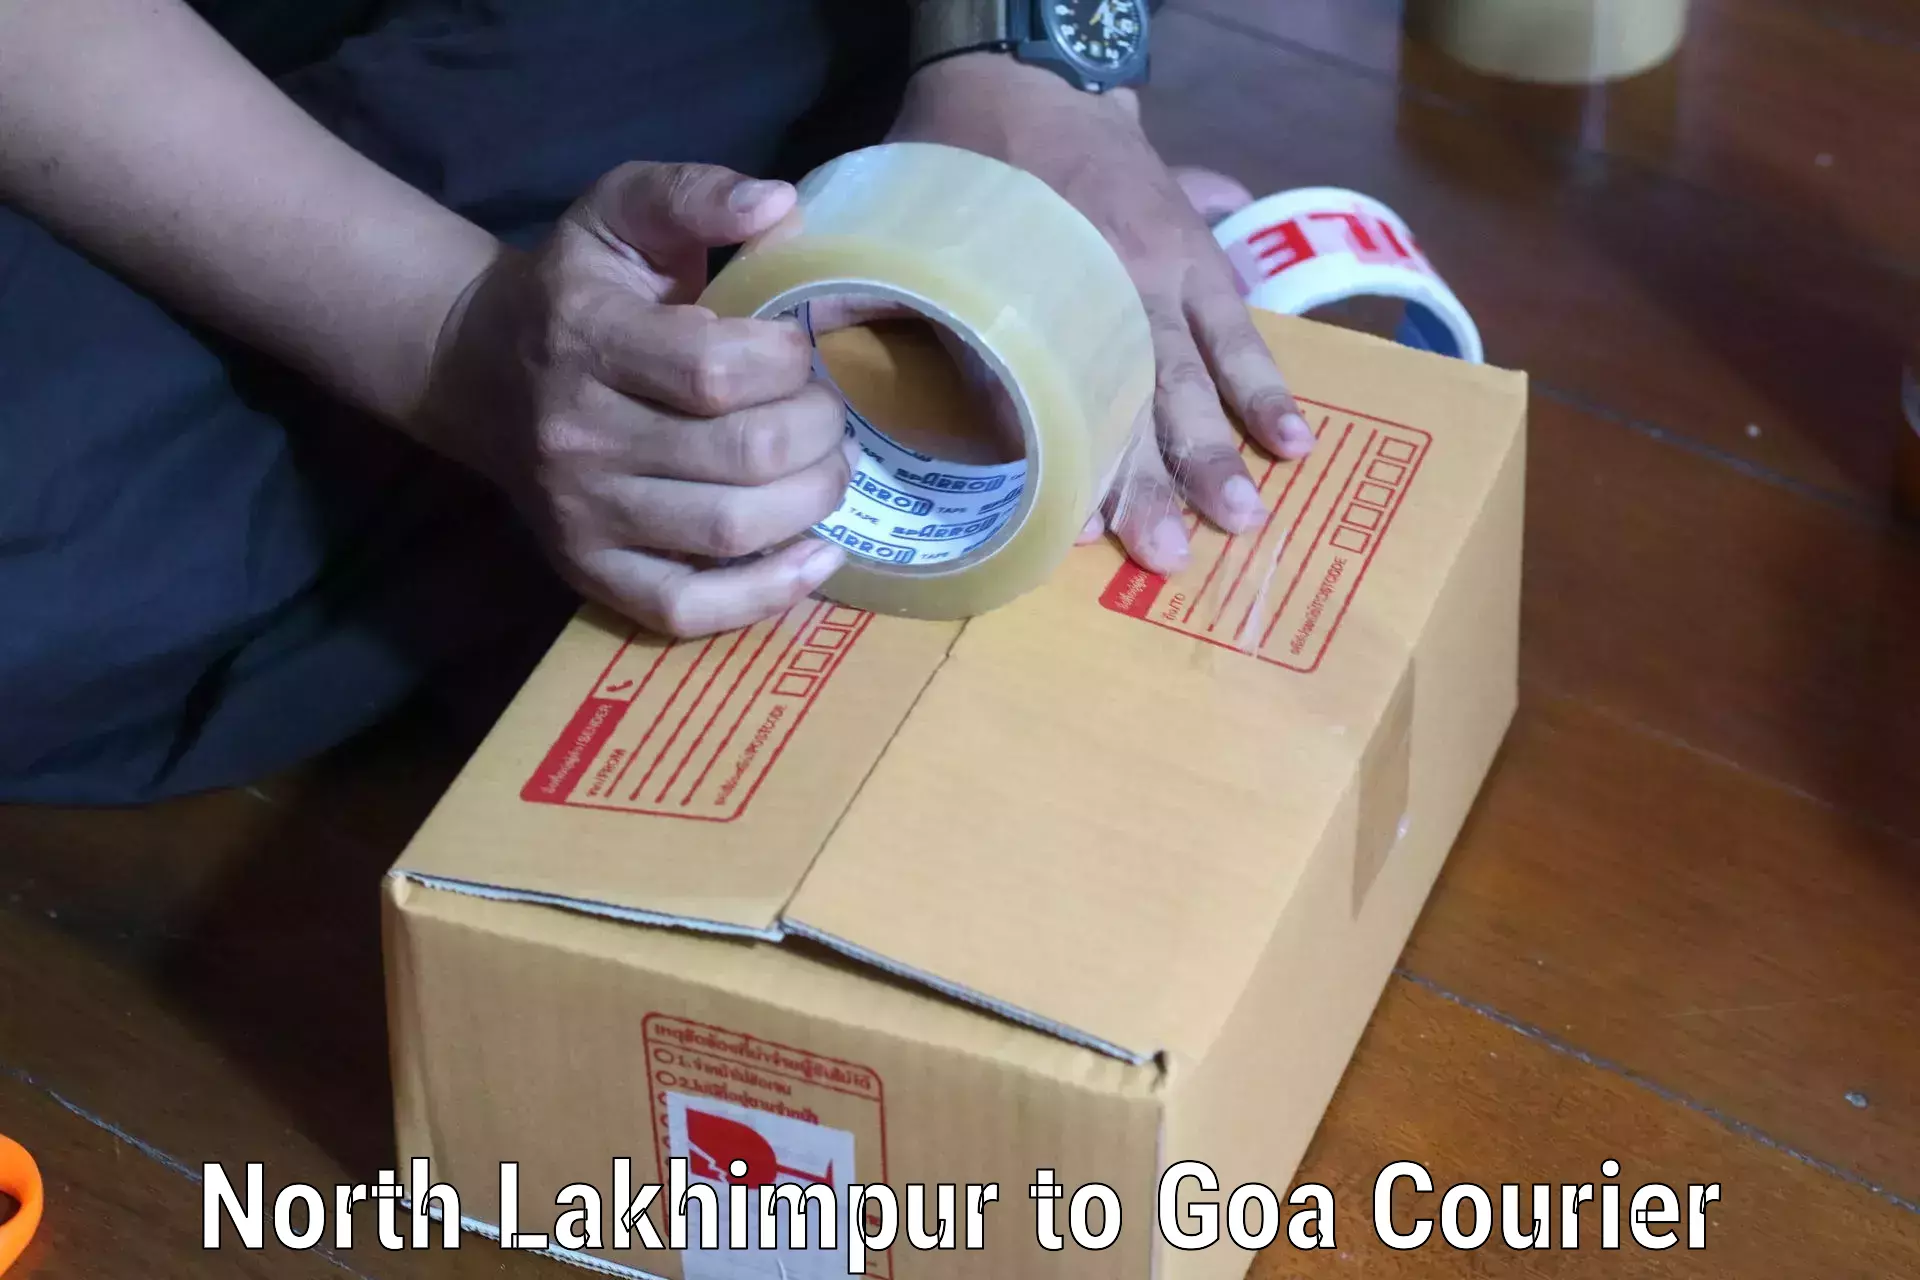 Courier service partnerships North Lakhimpur to Bardez